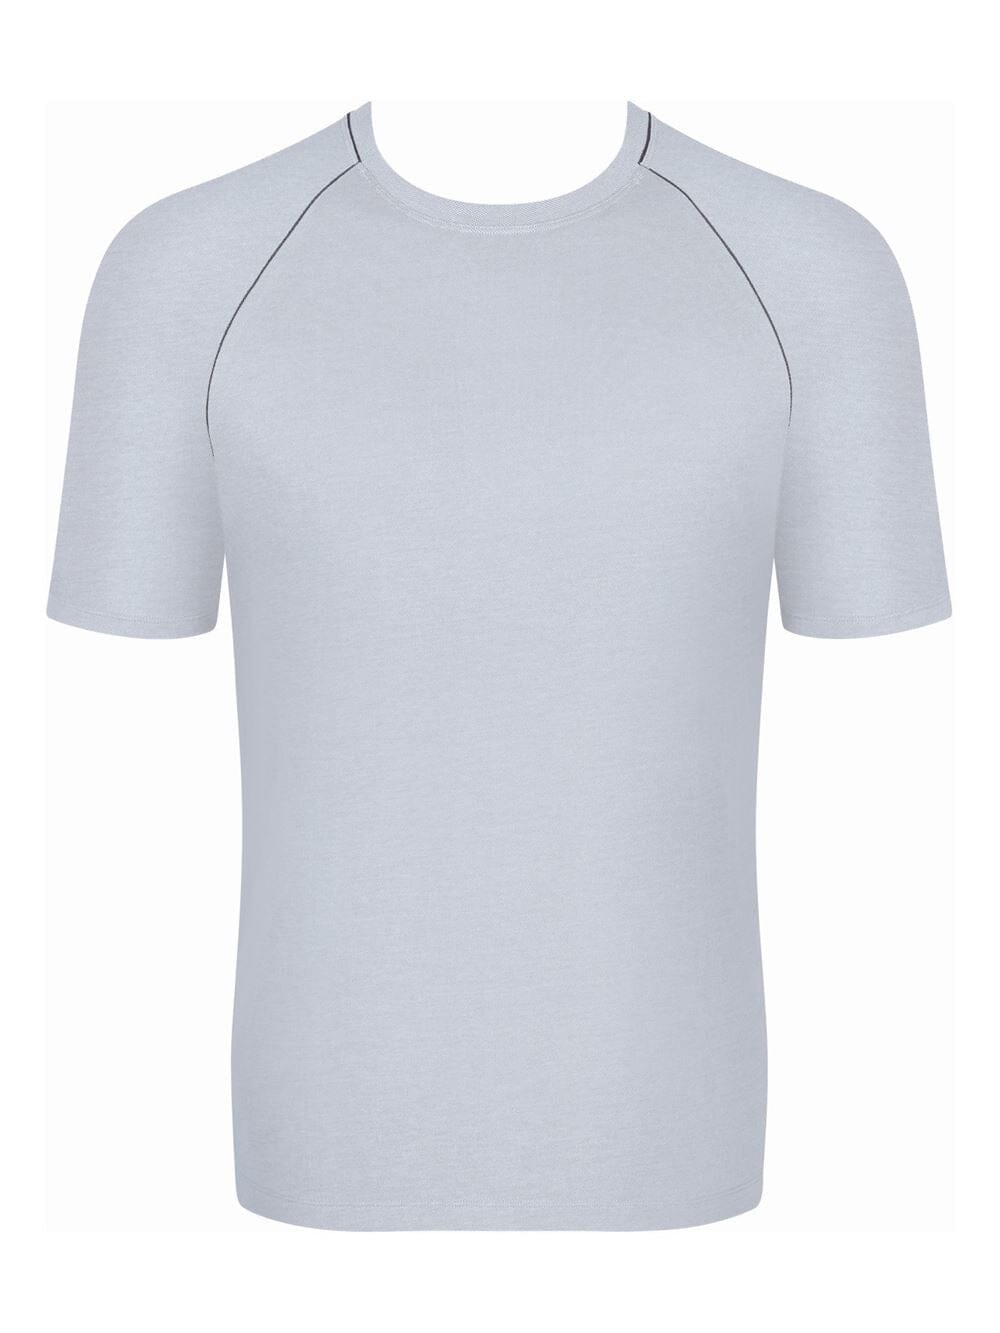 Sloggi - Move Flow O-Neck - Light Grey Melange Shirt Sloggi 